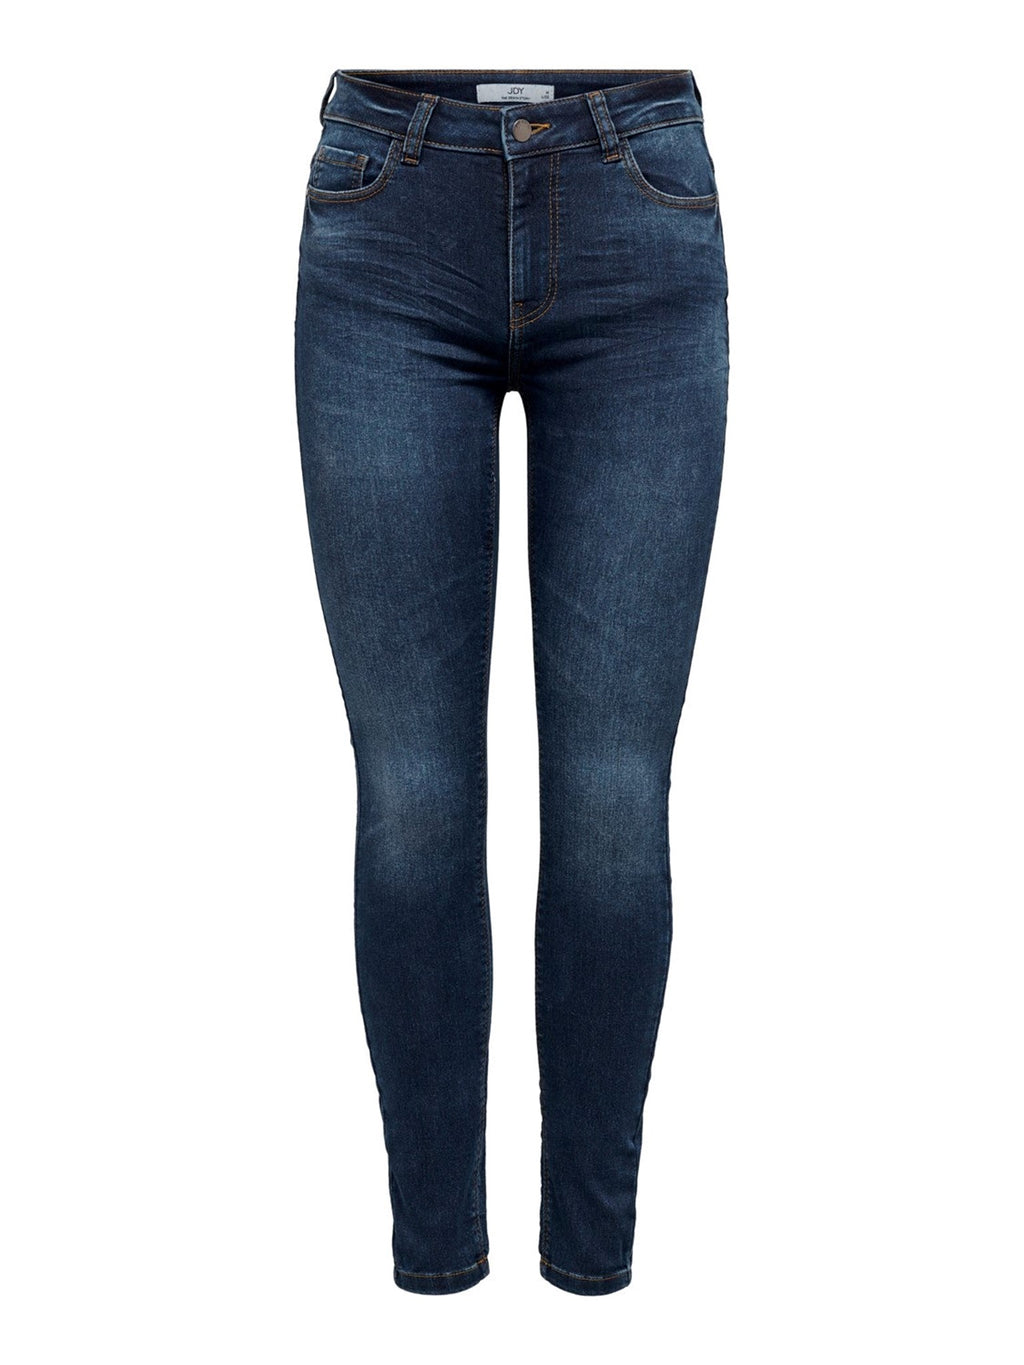 Performance Jeans - Blue denim (mid-waist)